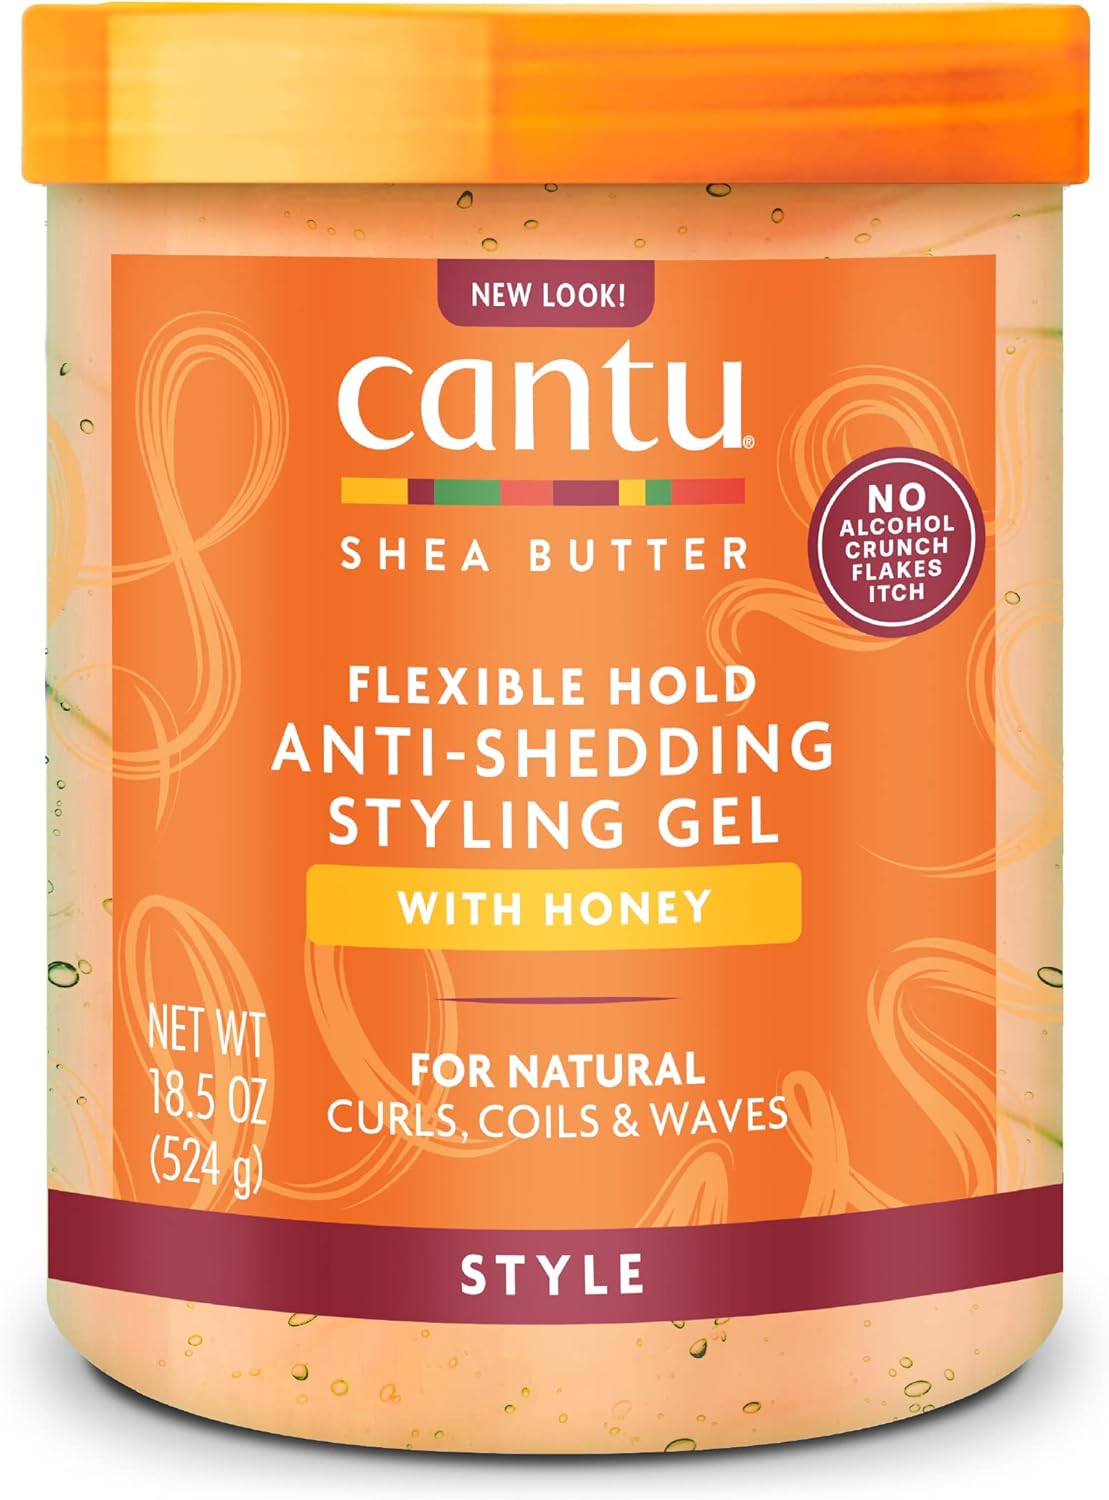 Cantu Shea Butter Maximum Hold Anti-Shedding Styling Gel with Honey